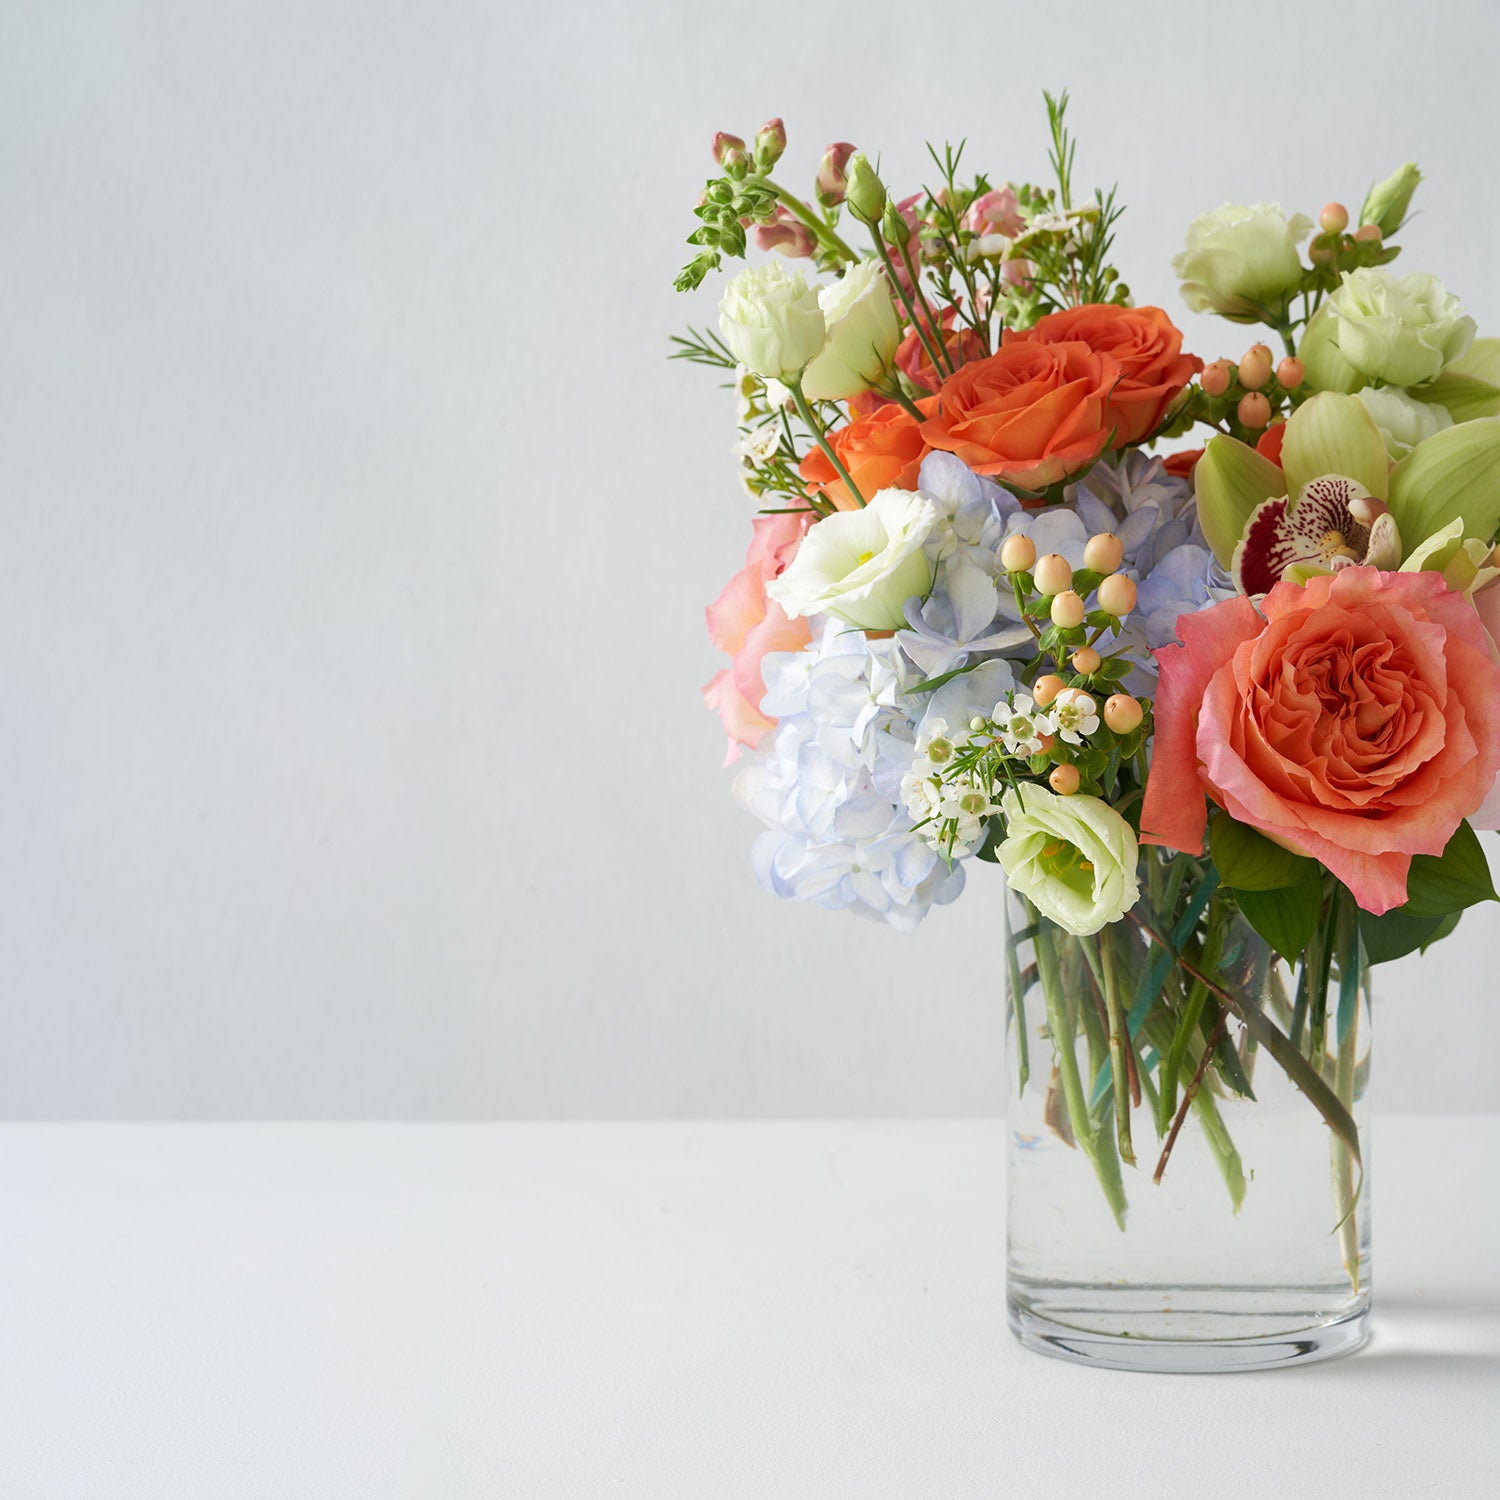 Glass vase of orange roses, peach hypericum berries, blue hydrangea and green cymbidium orchids on white background